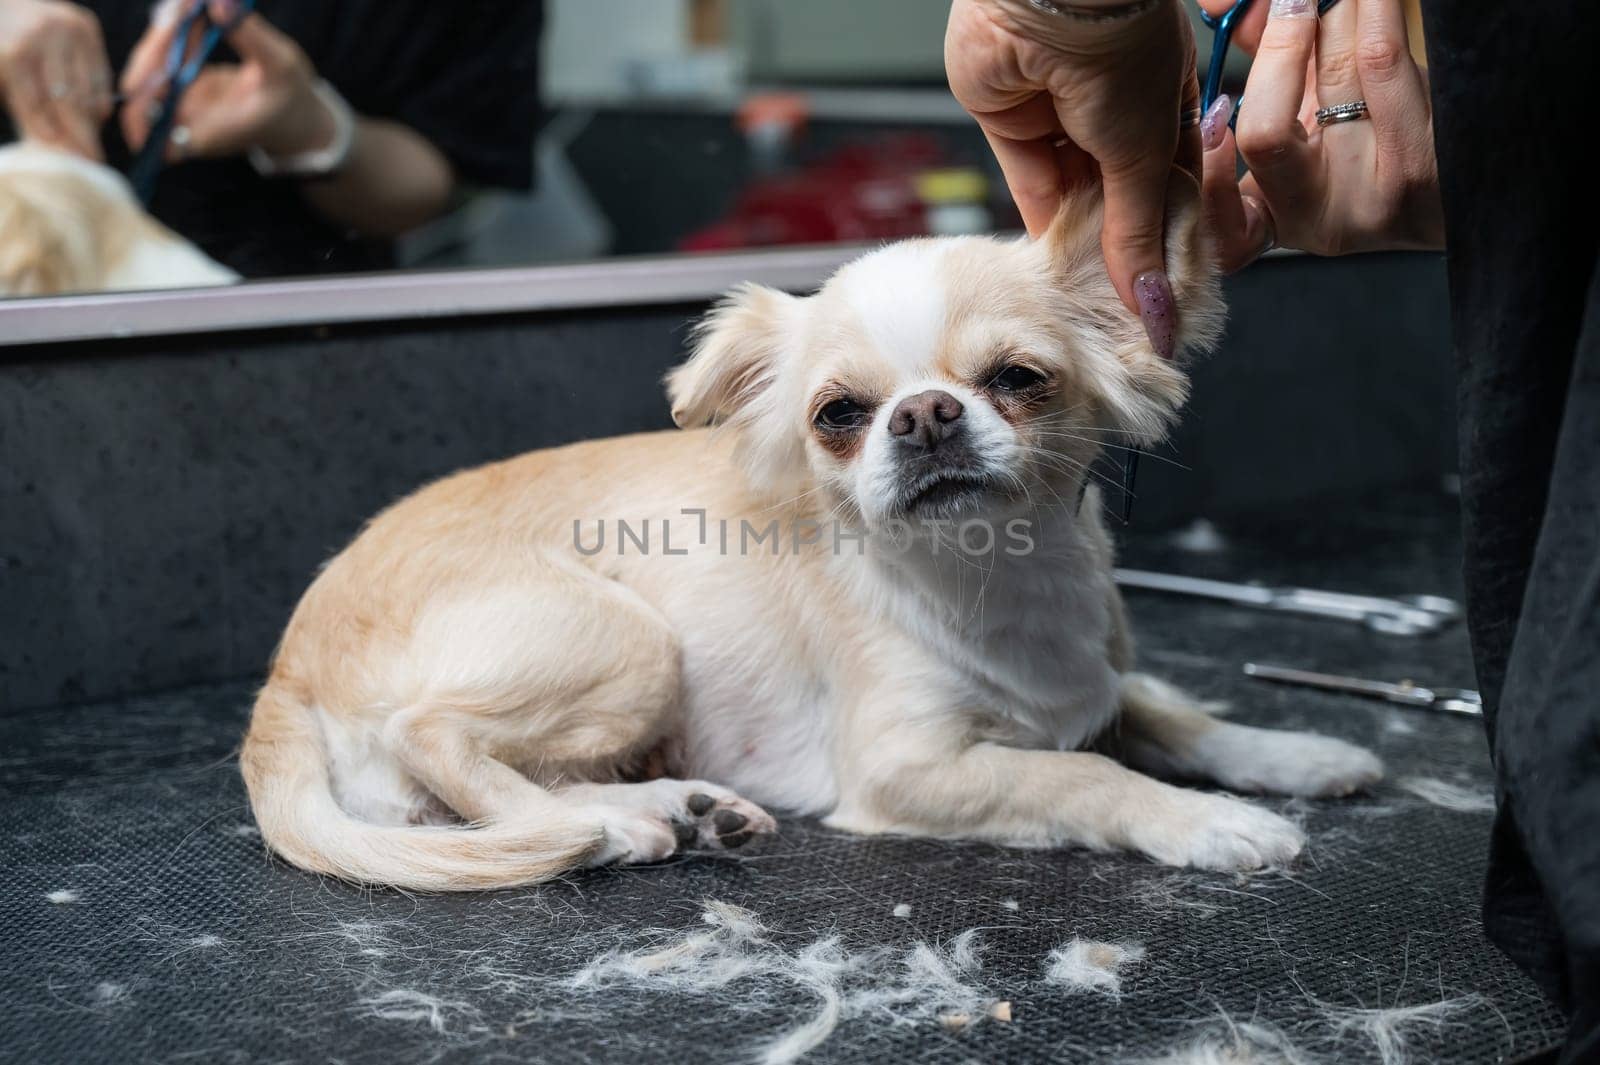 Woman cutting cute shorthair chihuahua dog in grooming salon